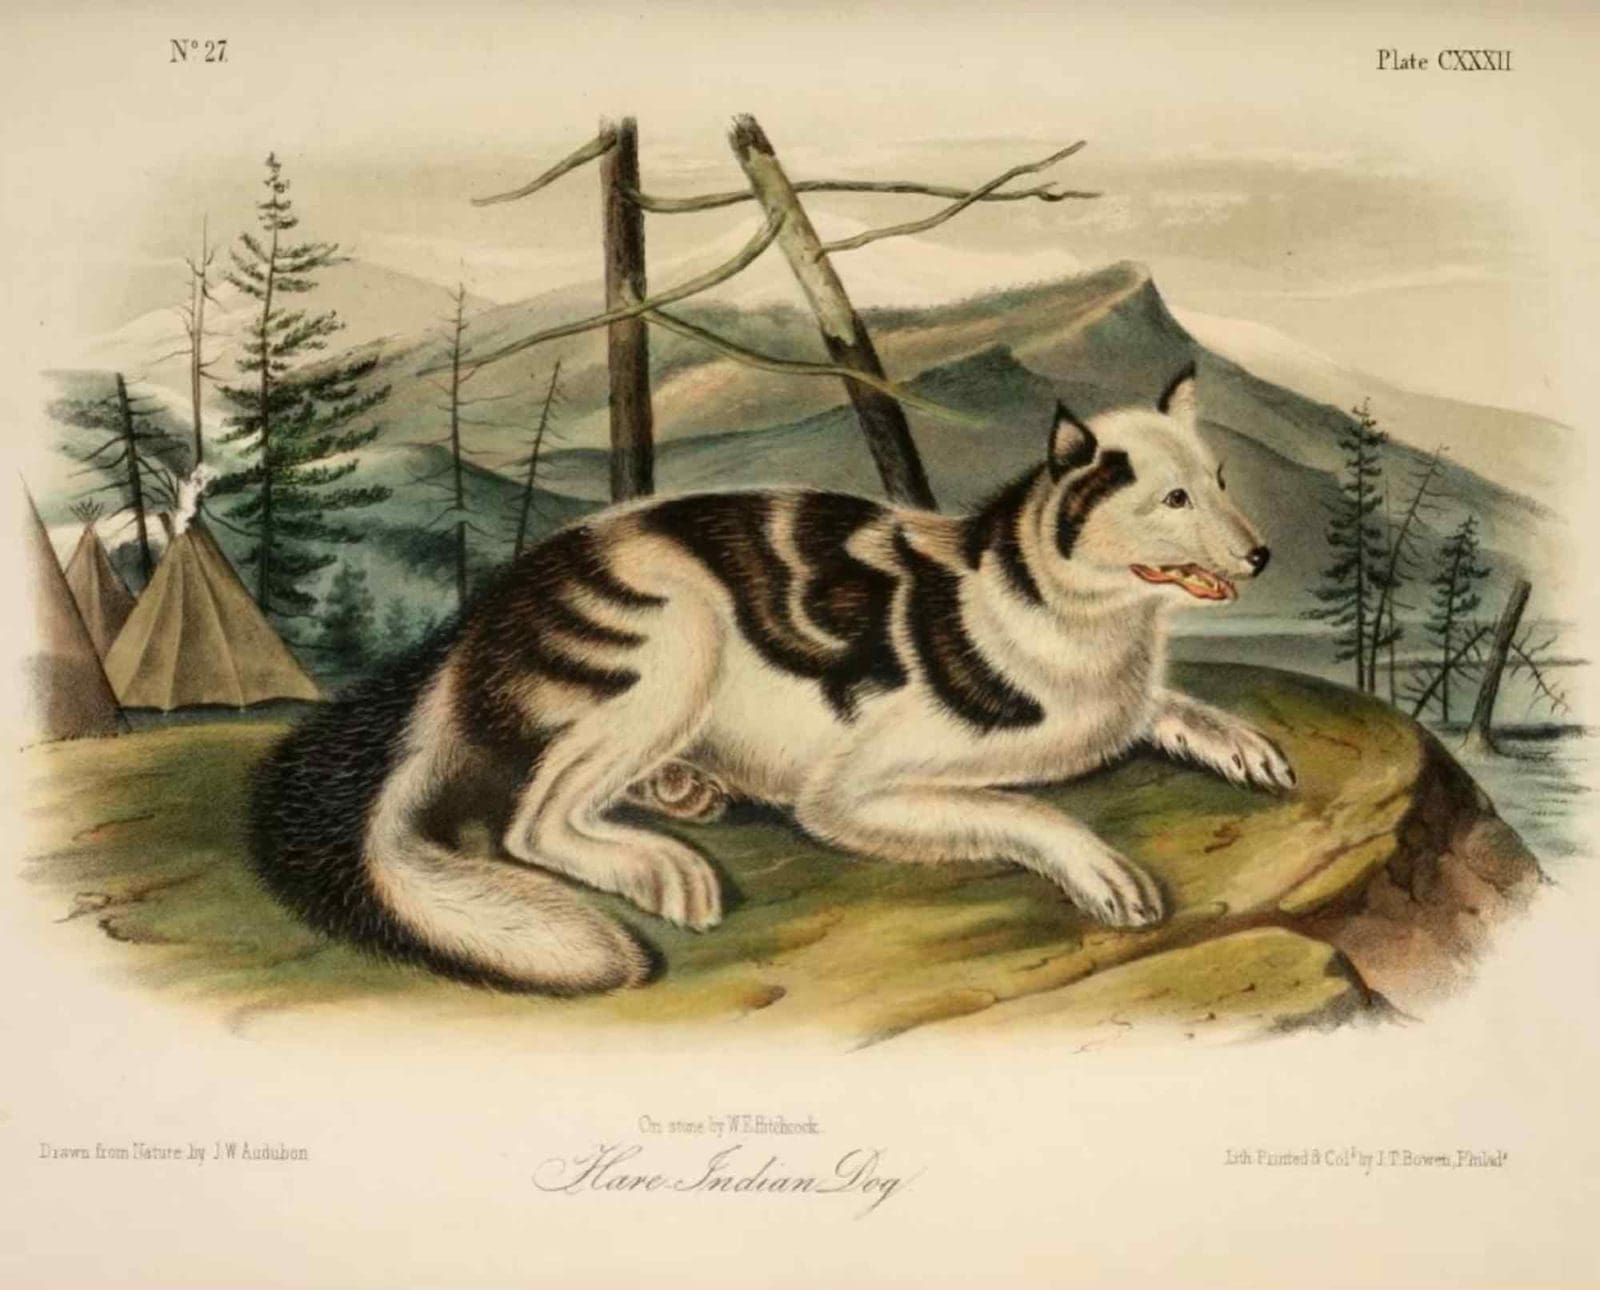 Illustration of the Hare Indian Dog by J.W. Audubon